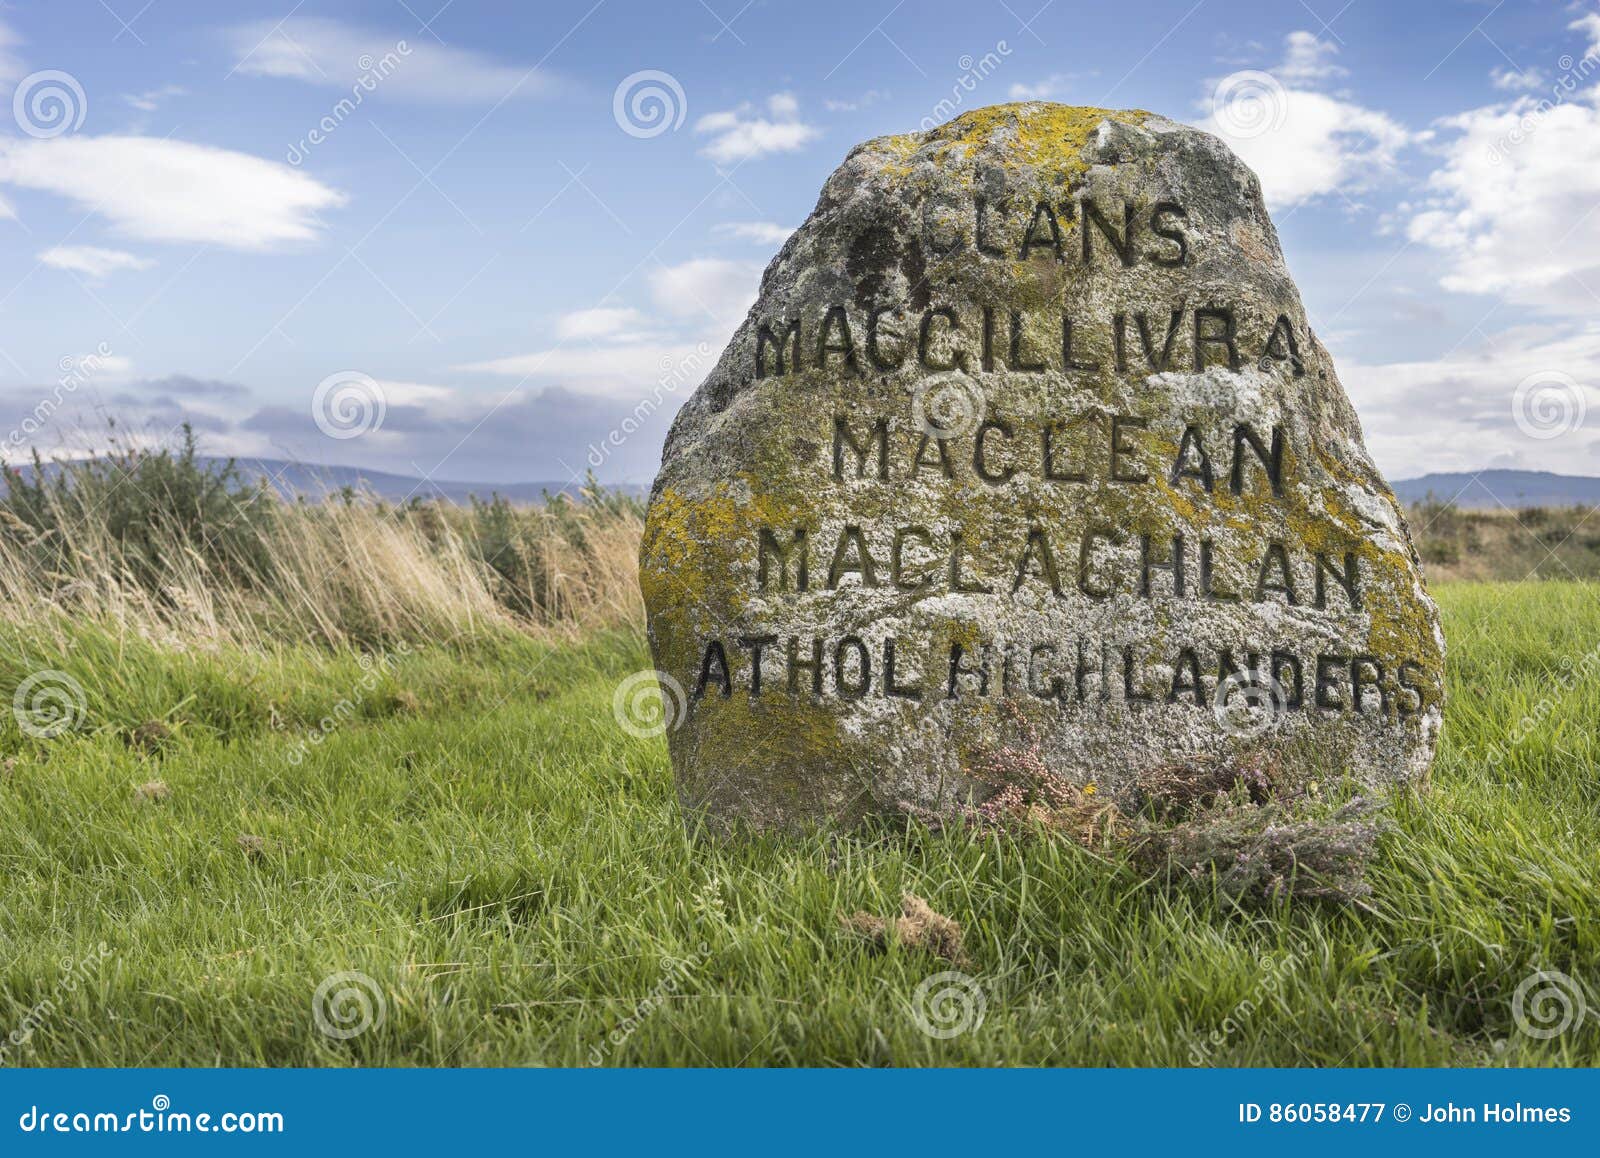 clan graves on culloden moor battlefield in scotland.